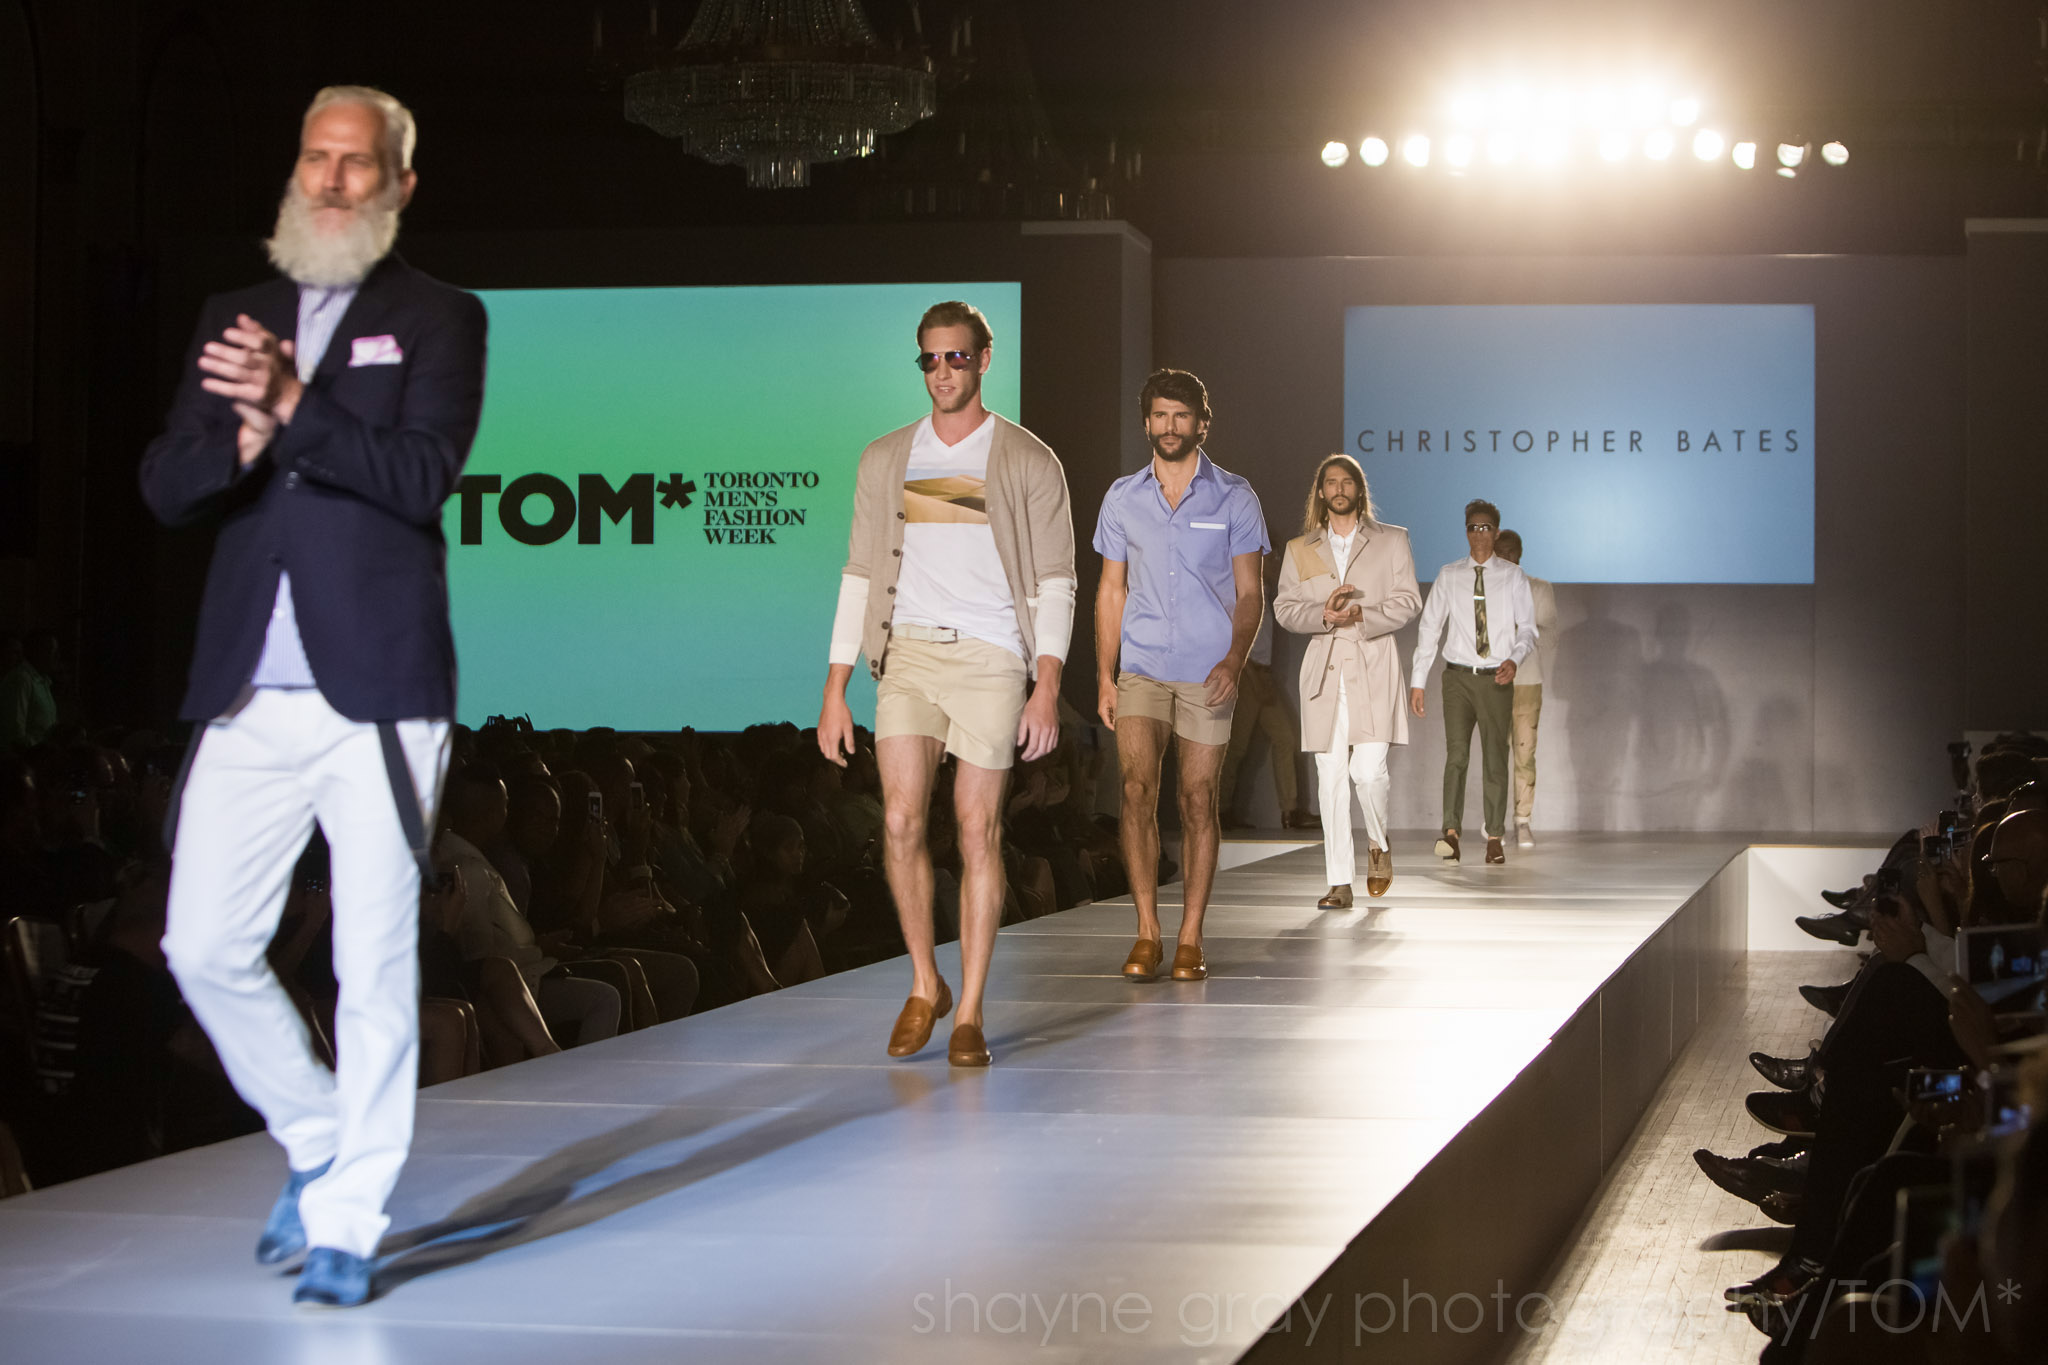 Shayne-Gray-Toronto-men's-fashion_week-TOM-christopher-bates-7409.jpg